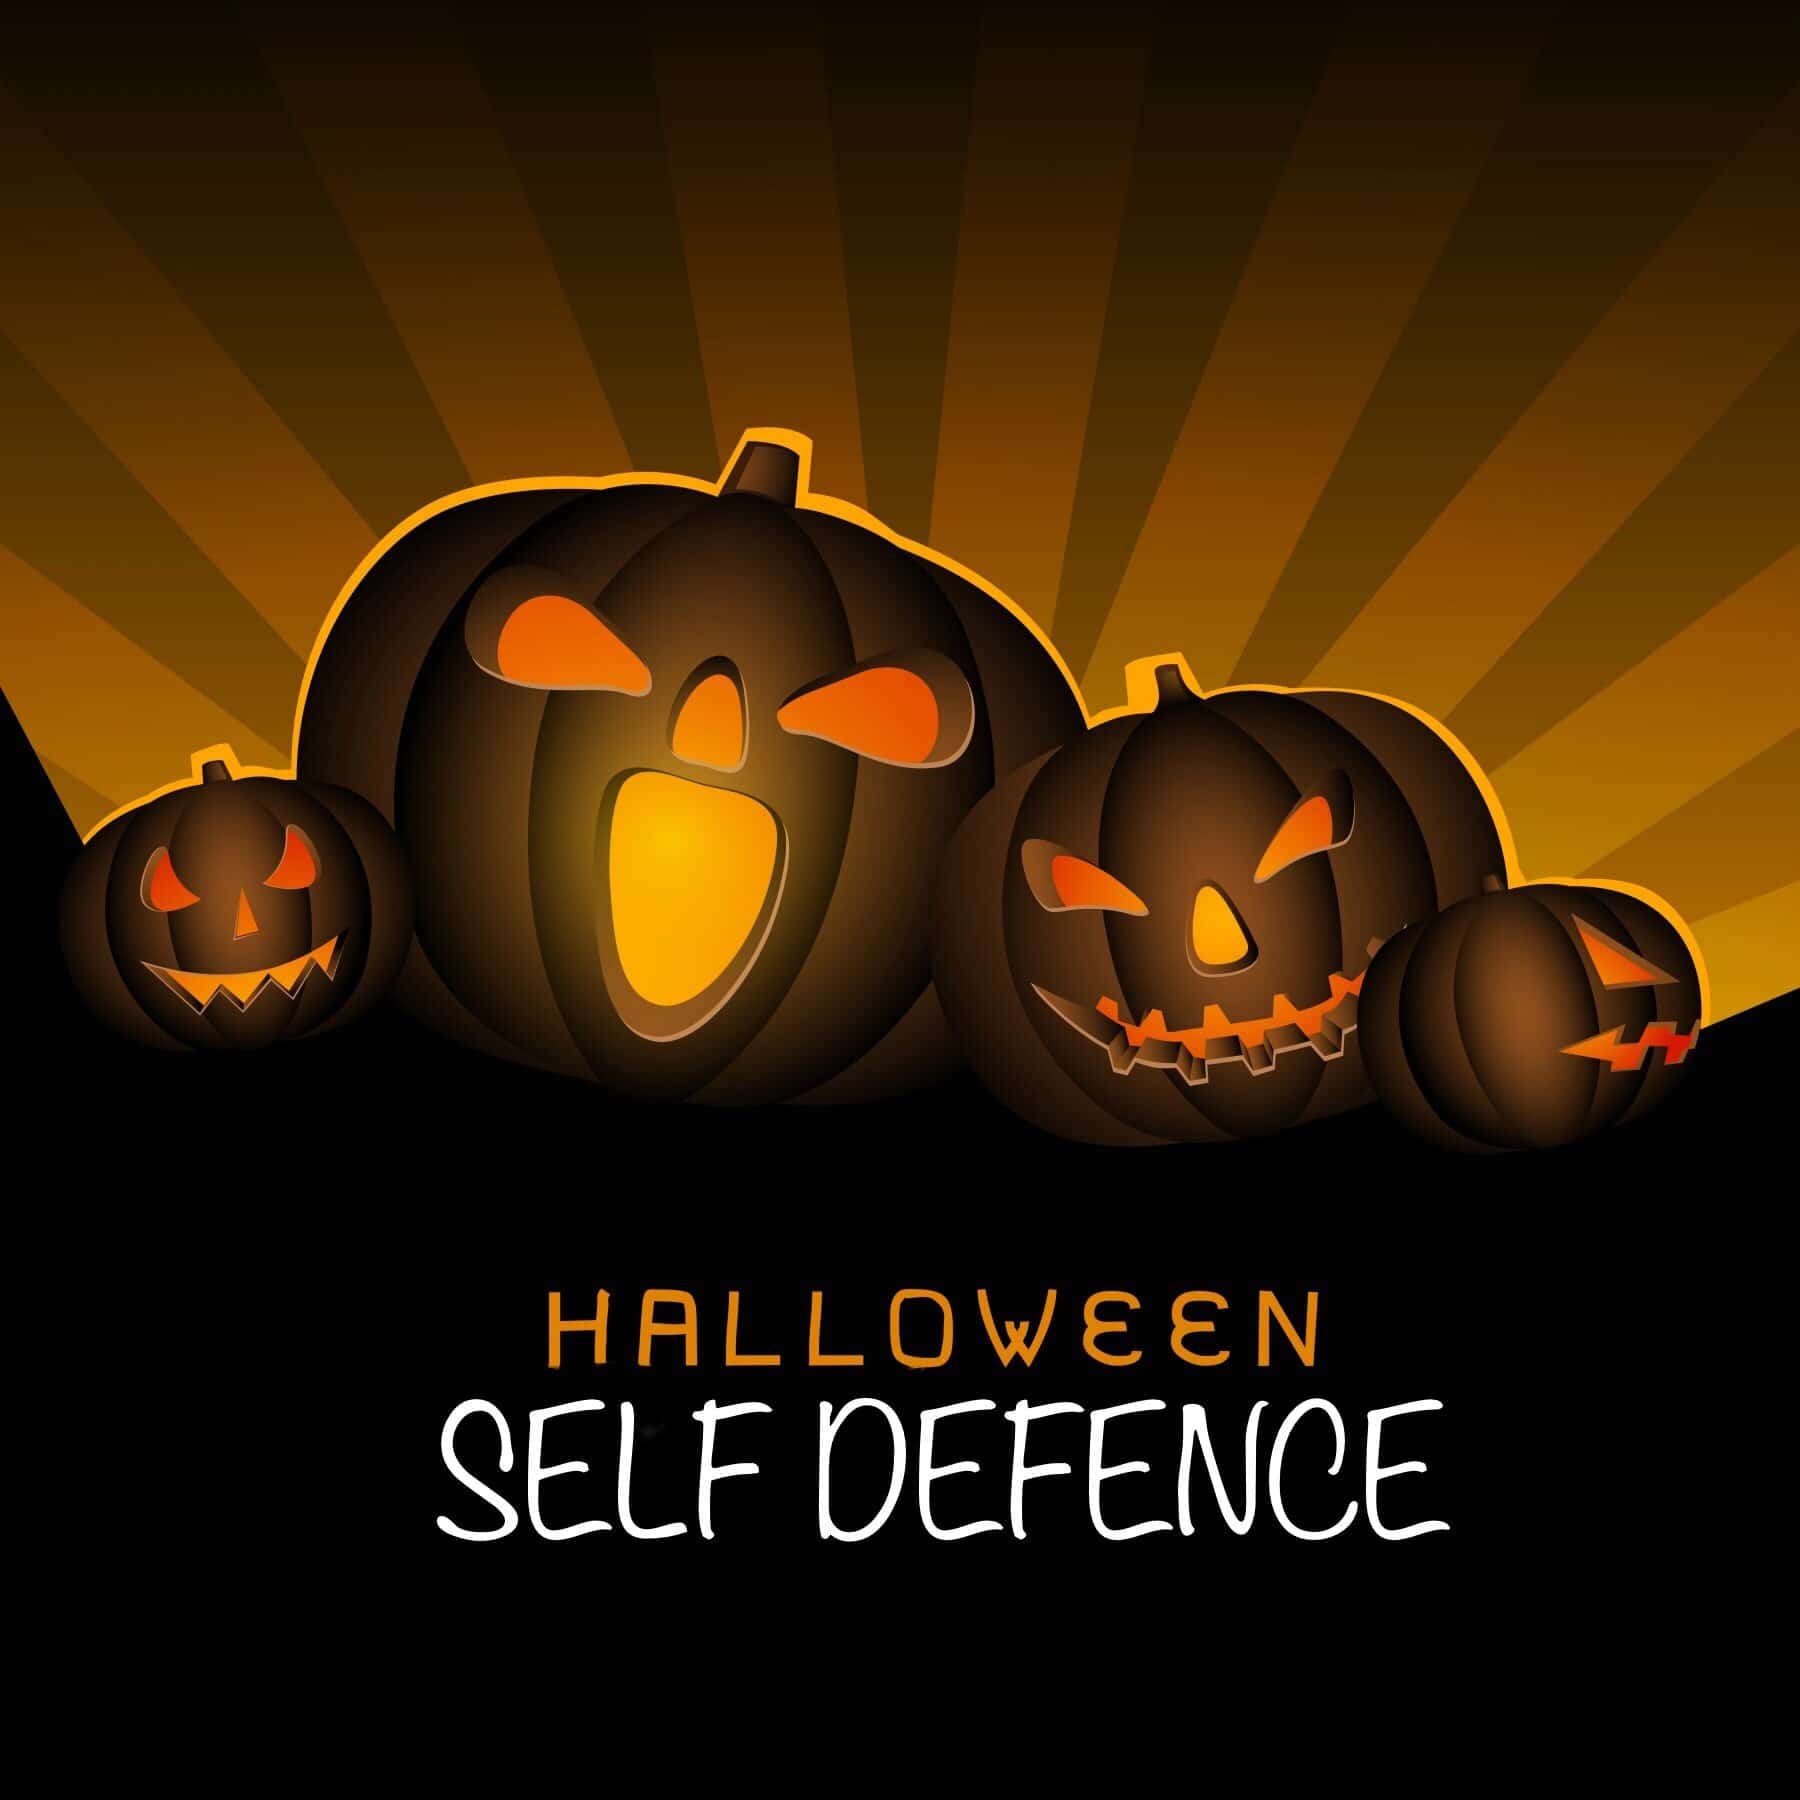 Halloween self defense, pumpkins